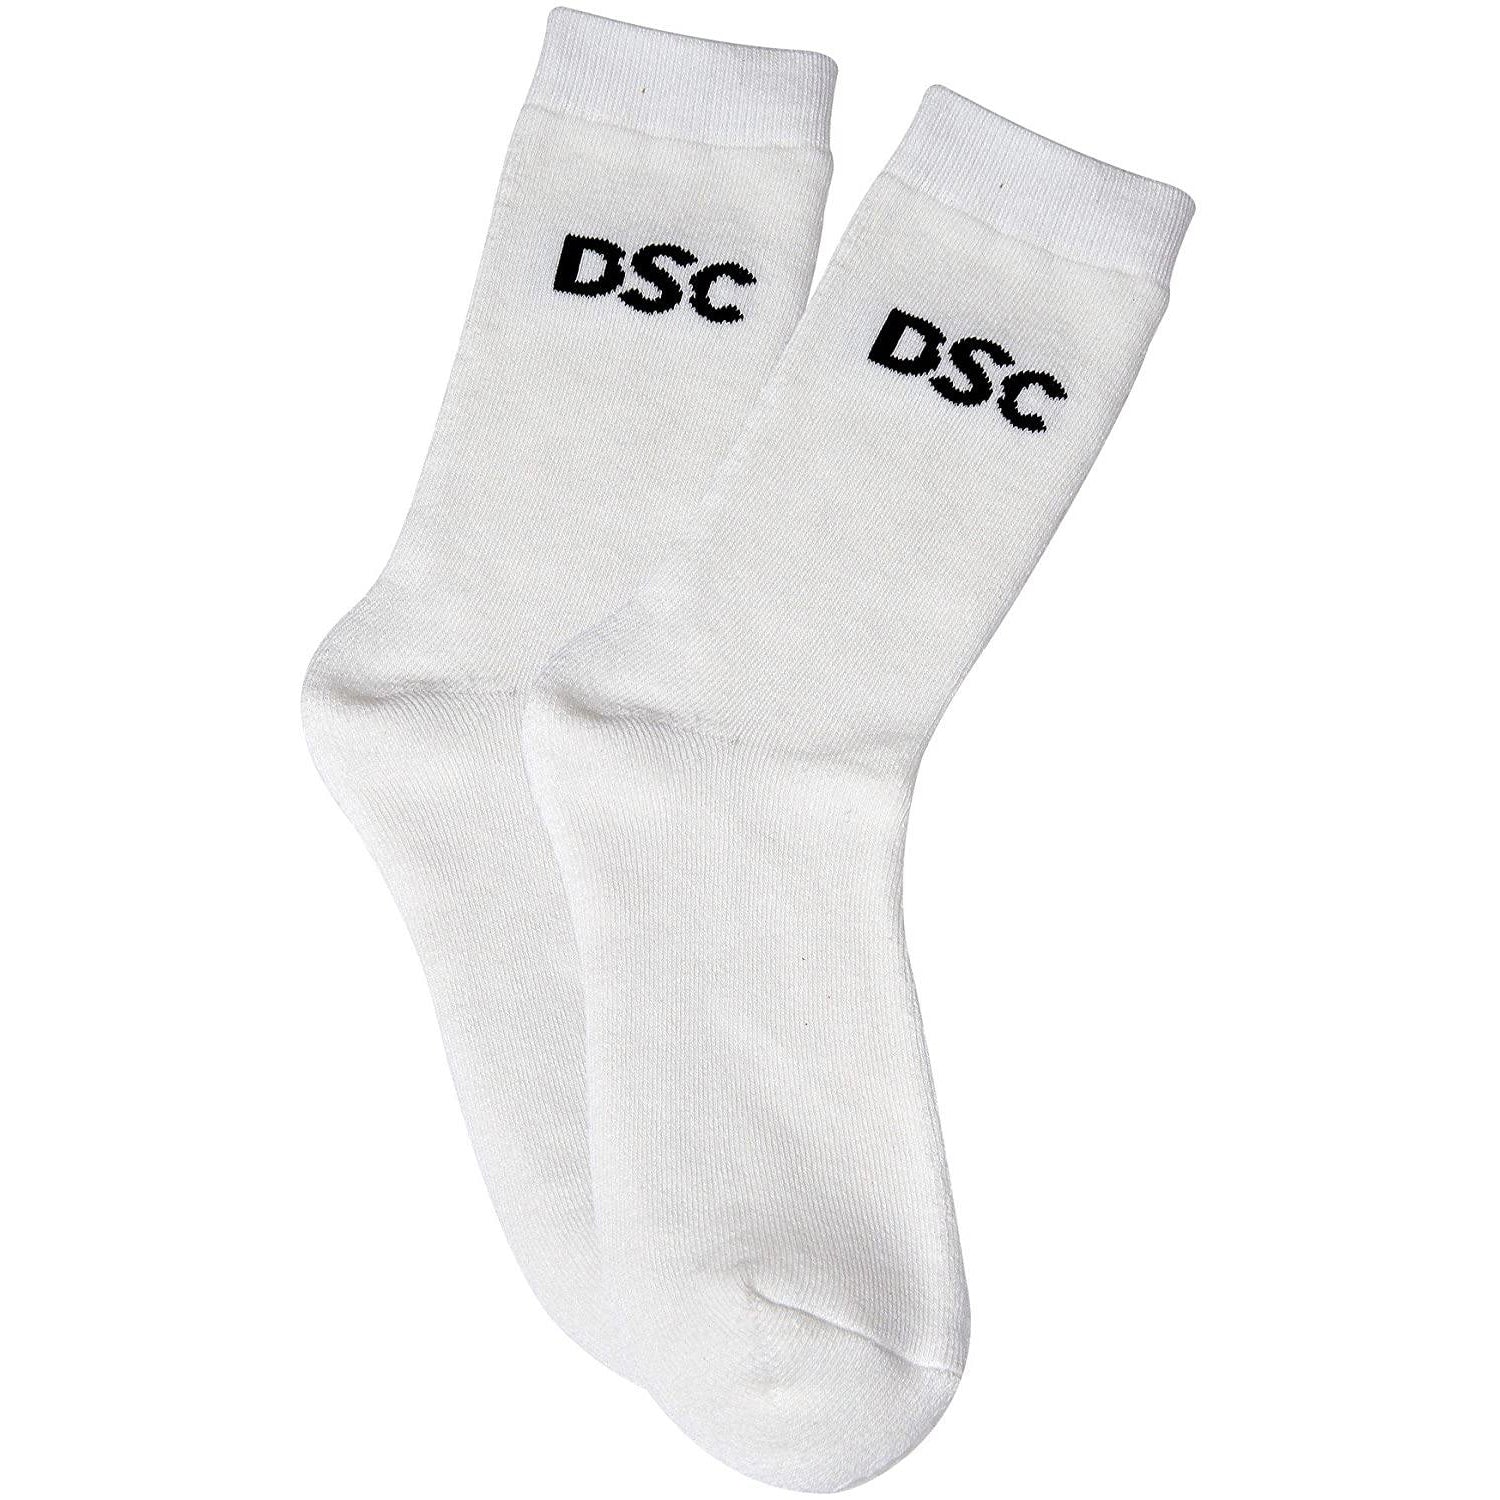 DSC Passion Cricket Socks - White/Black - Best Price online Prokicksports.com